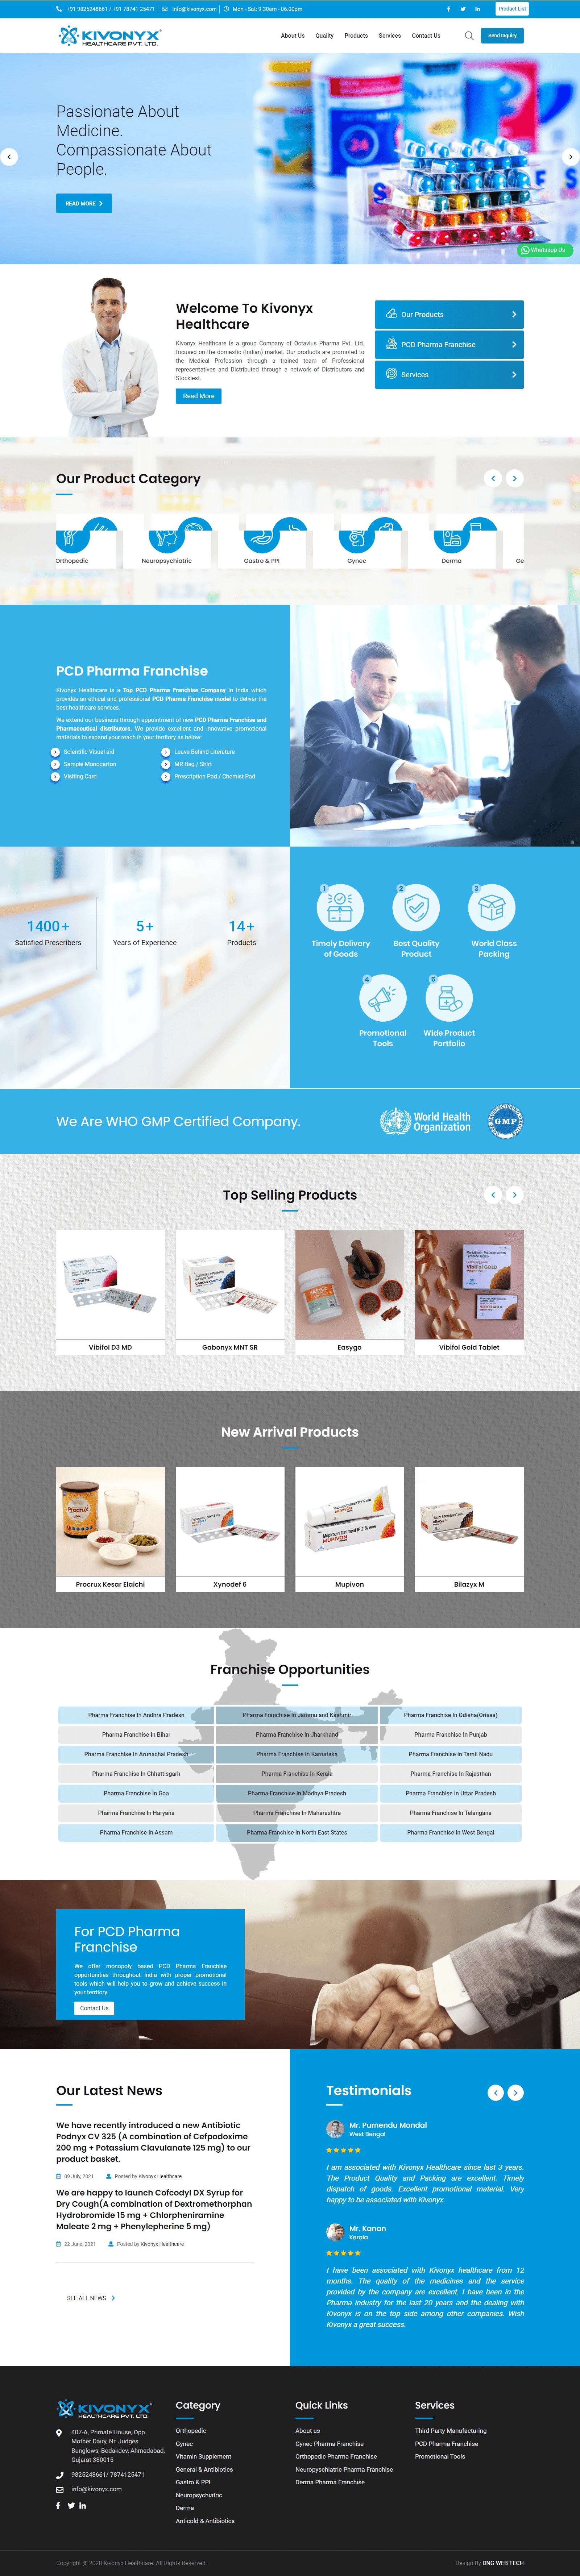 Pharmaceutical website design
